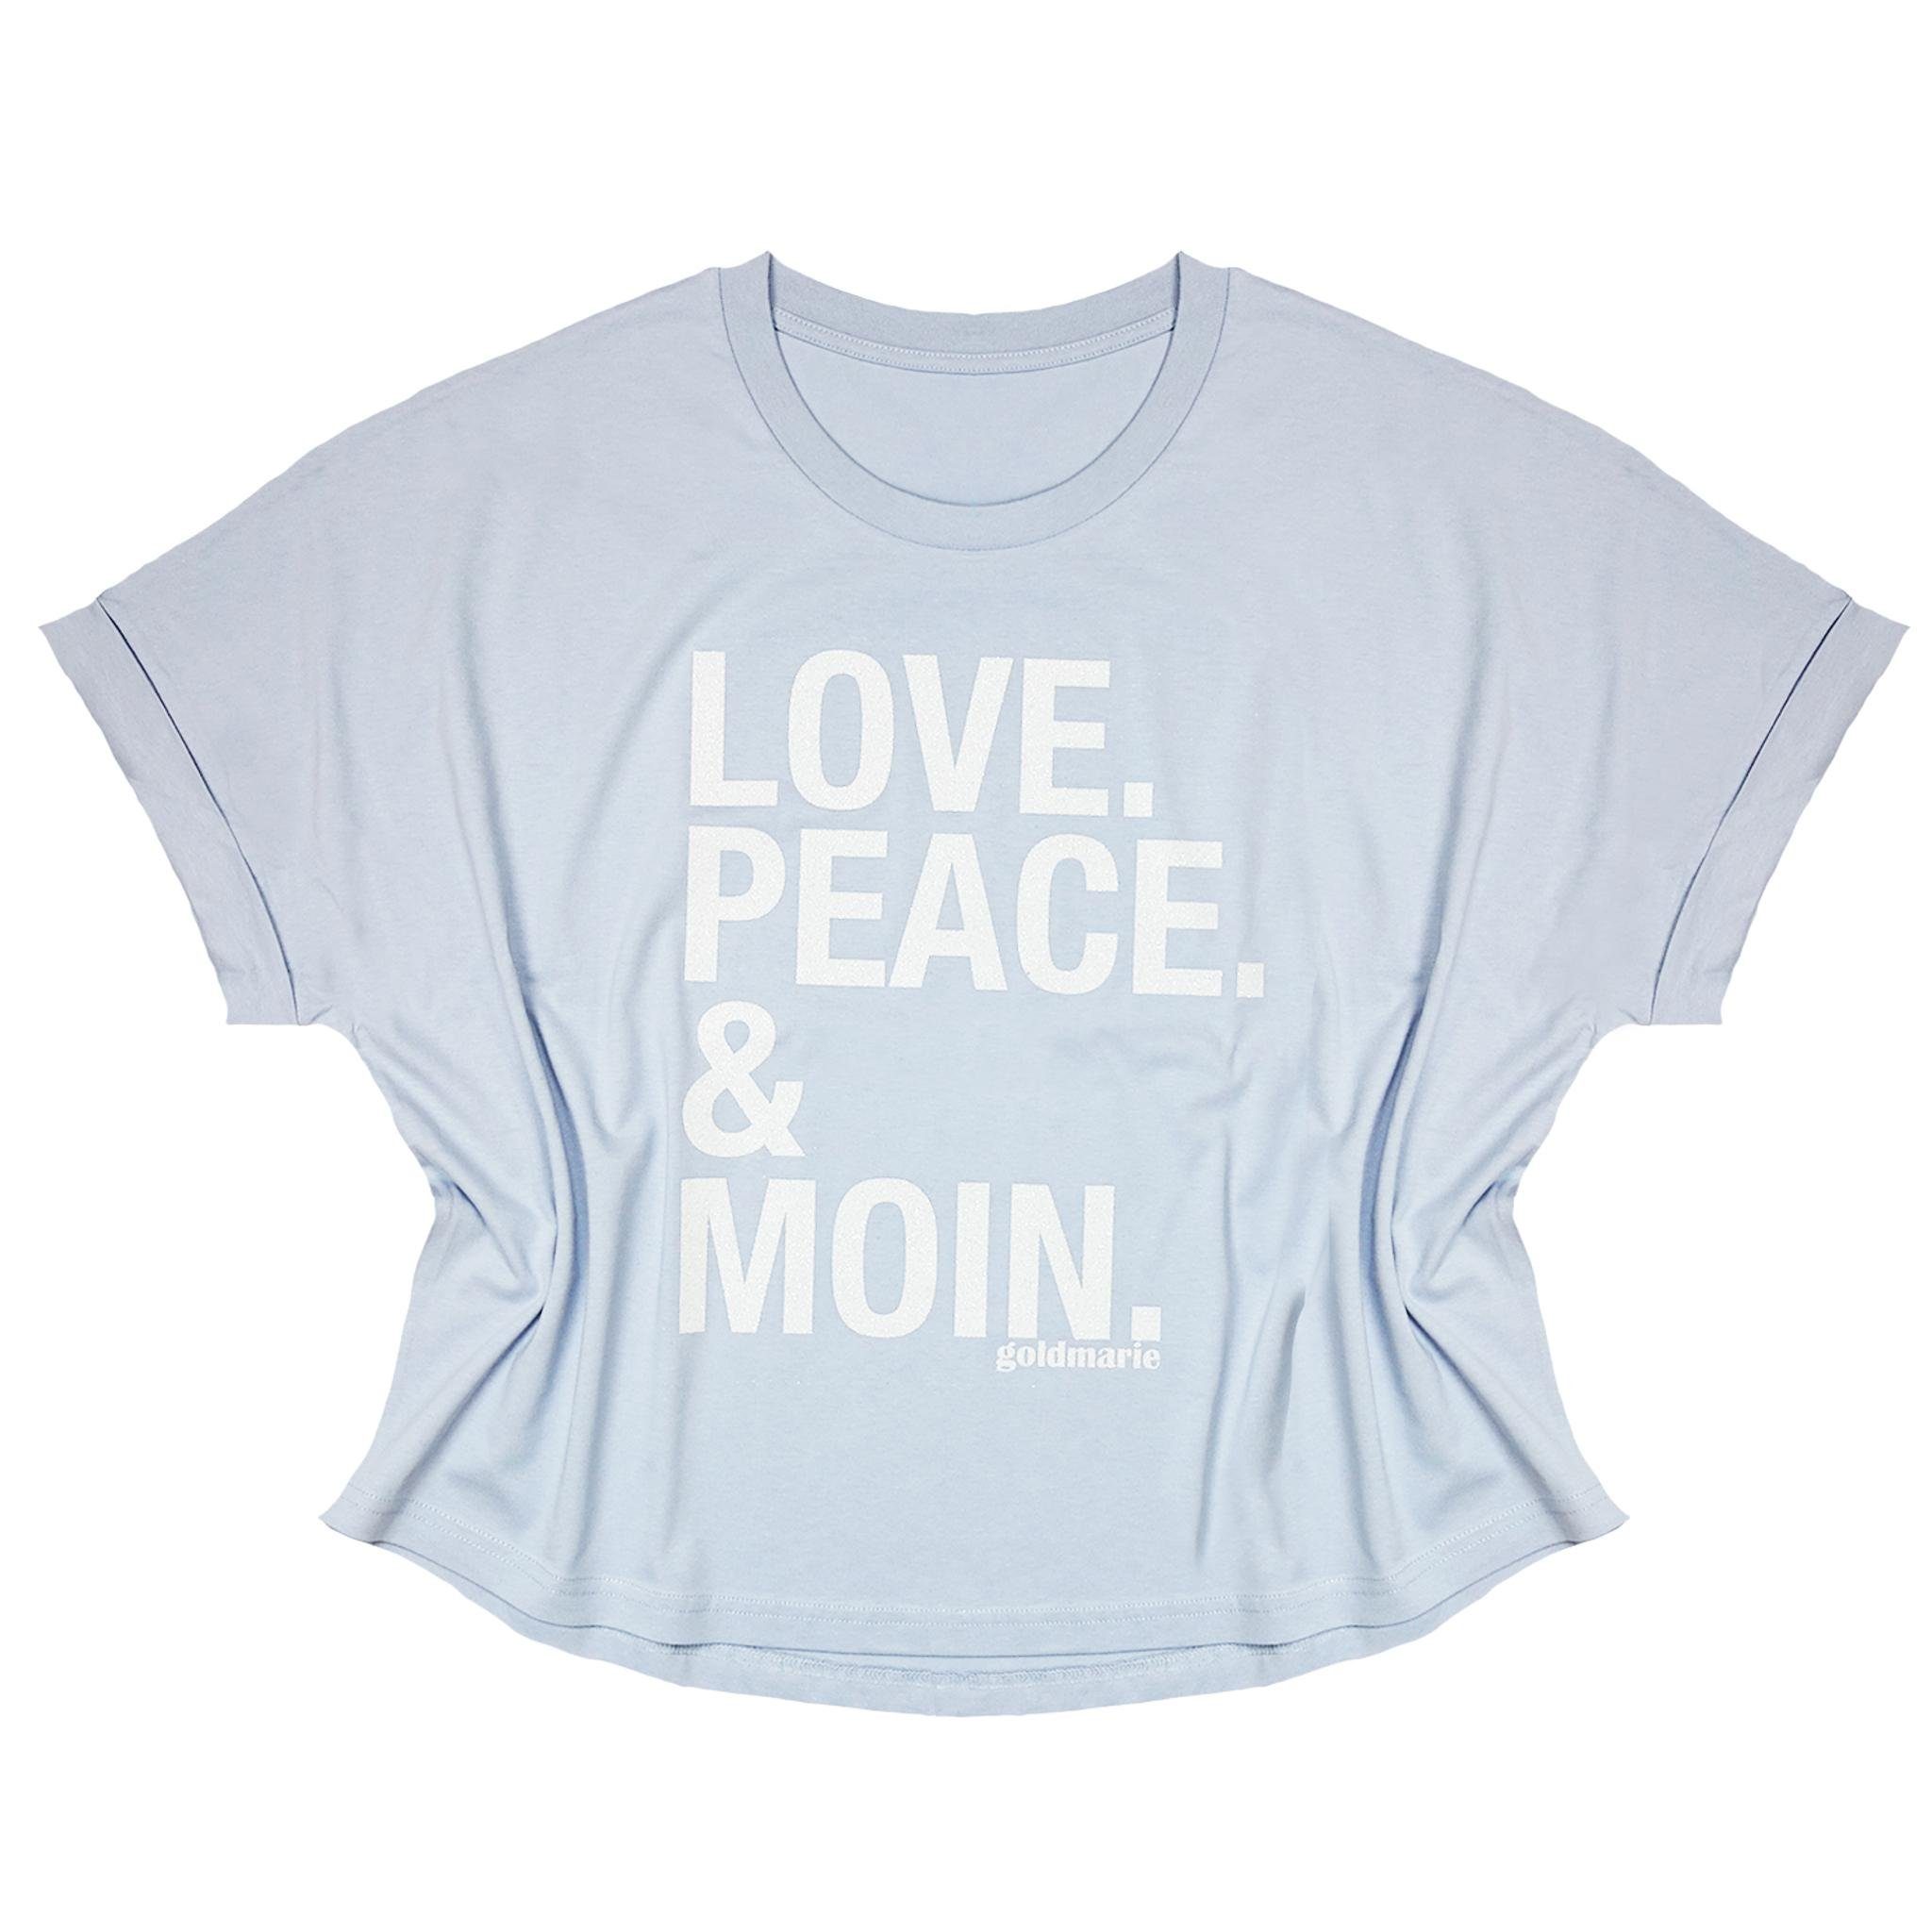 PEACE Baumwolle mit Shirt MOIN eisblau T-Shirt goldmarie Uschi Glitzer LOVE